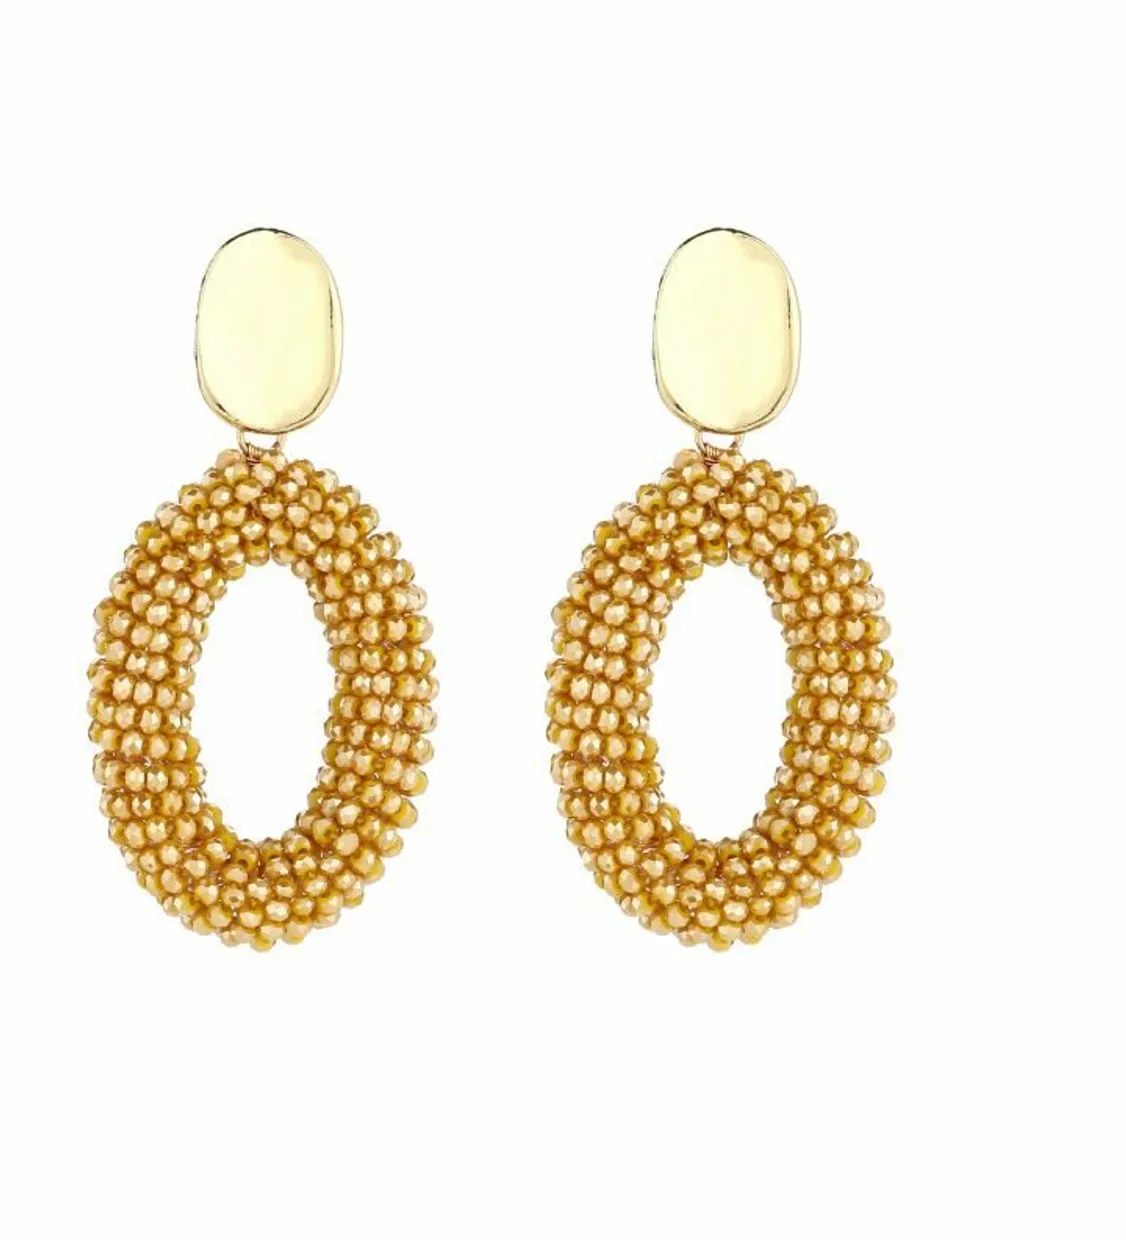 Beads earrings gold